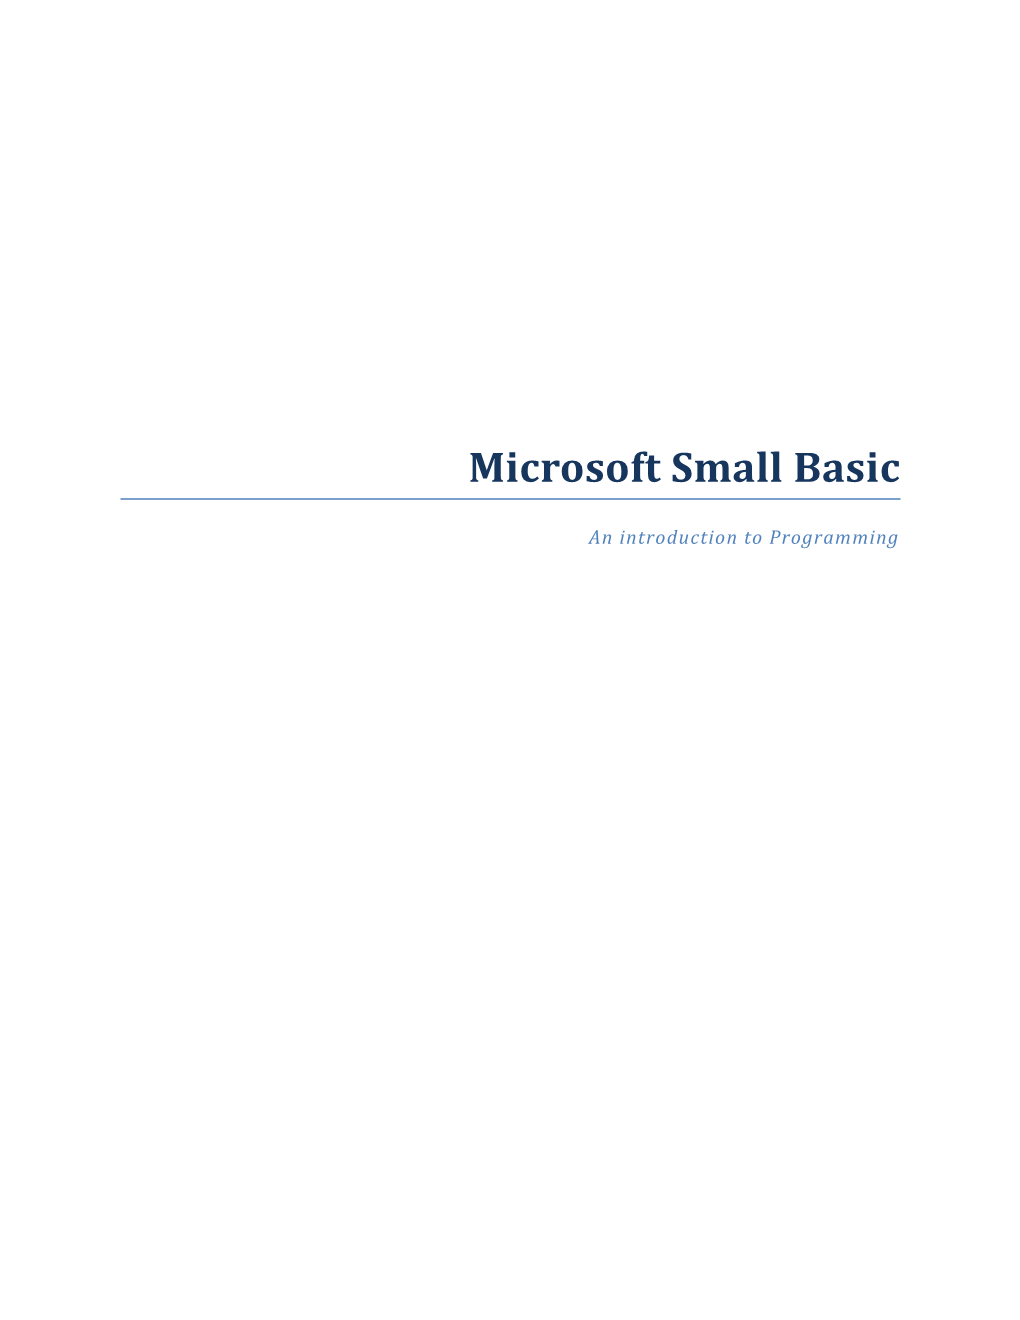 Small Basic and Programming